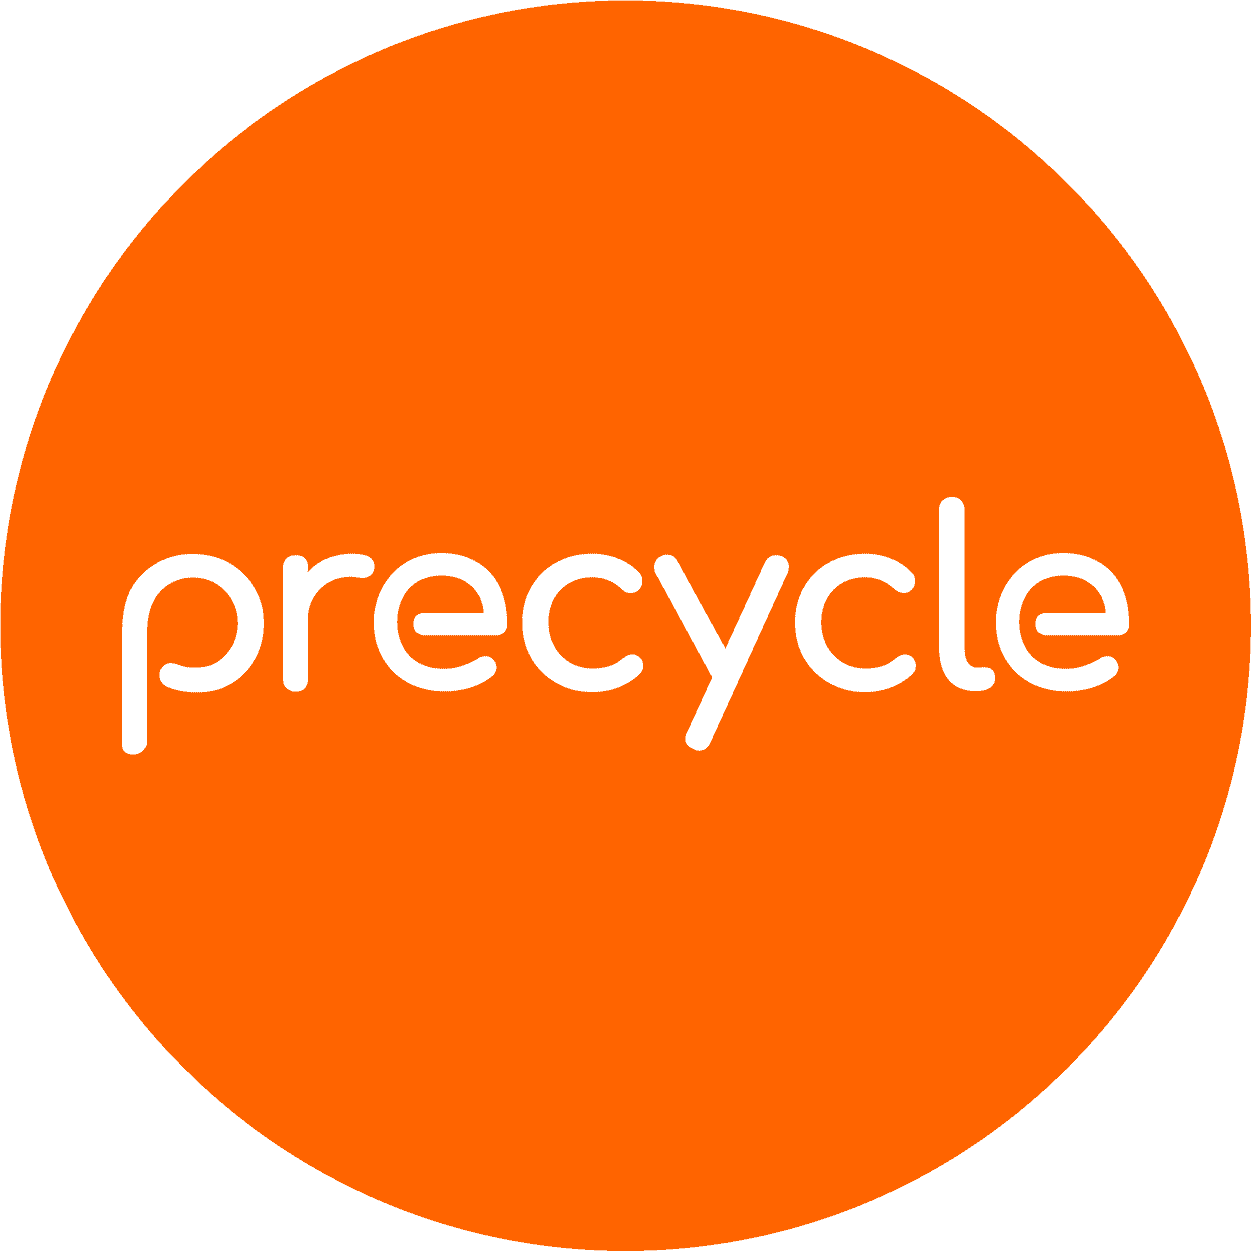 Precycle logo 2